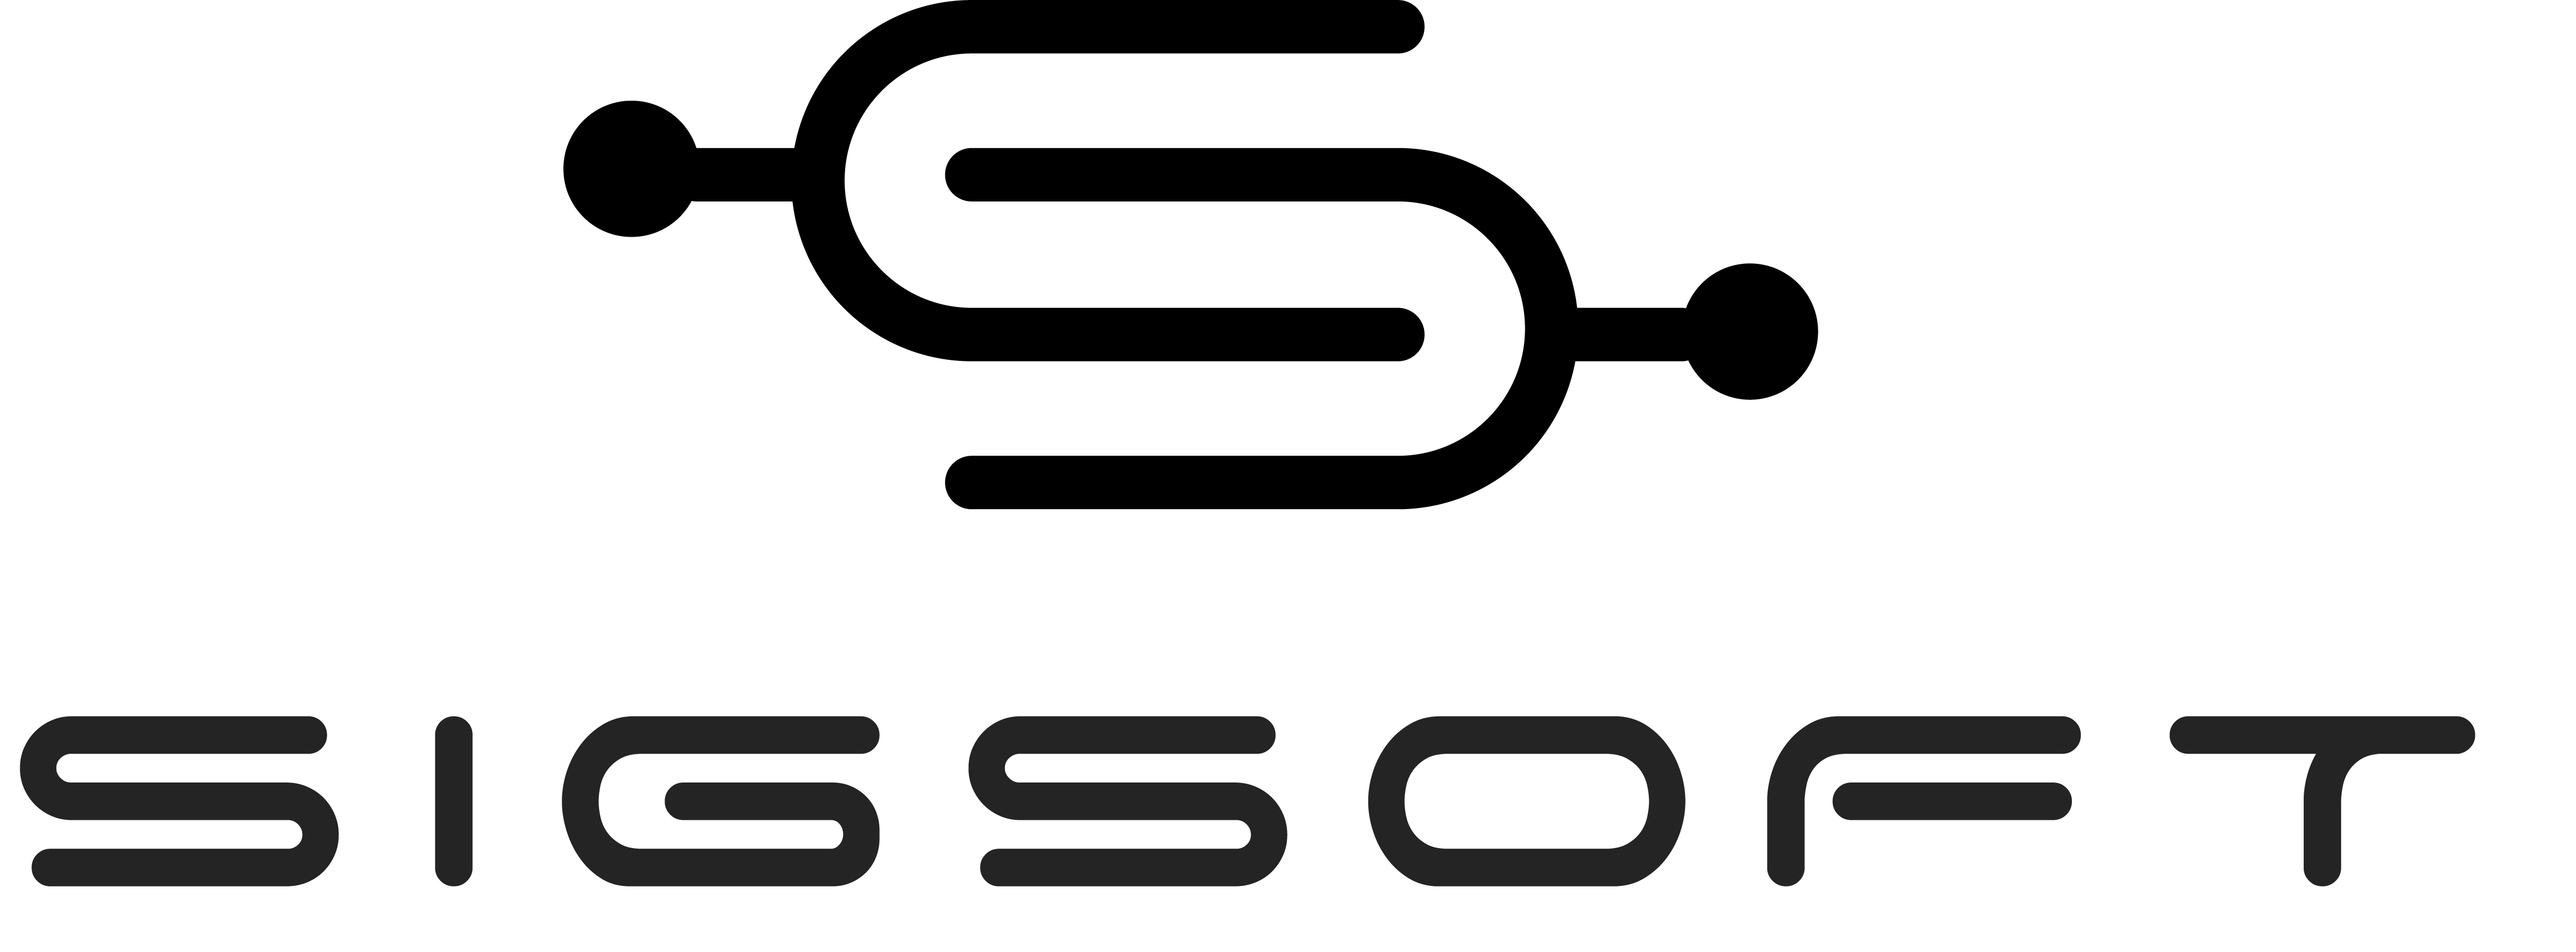 SIGSOFT Logo,, no tagline, PNG format